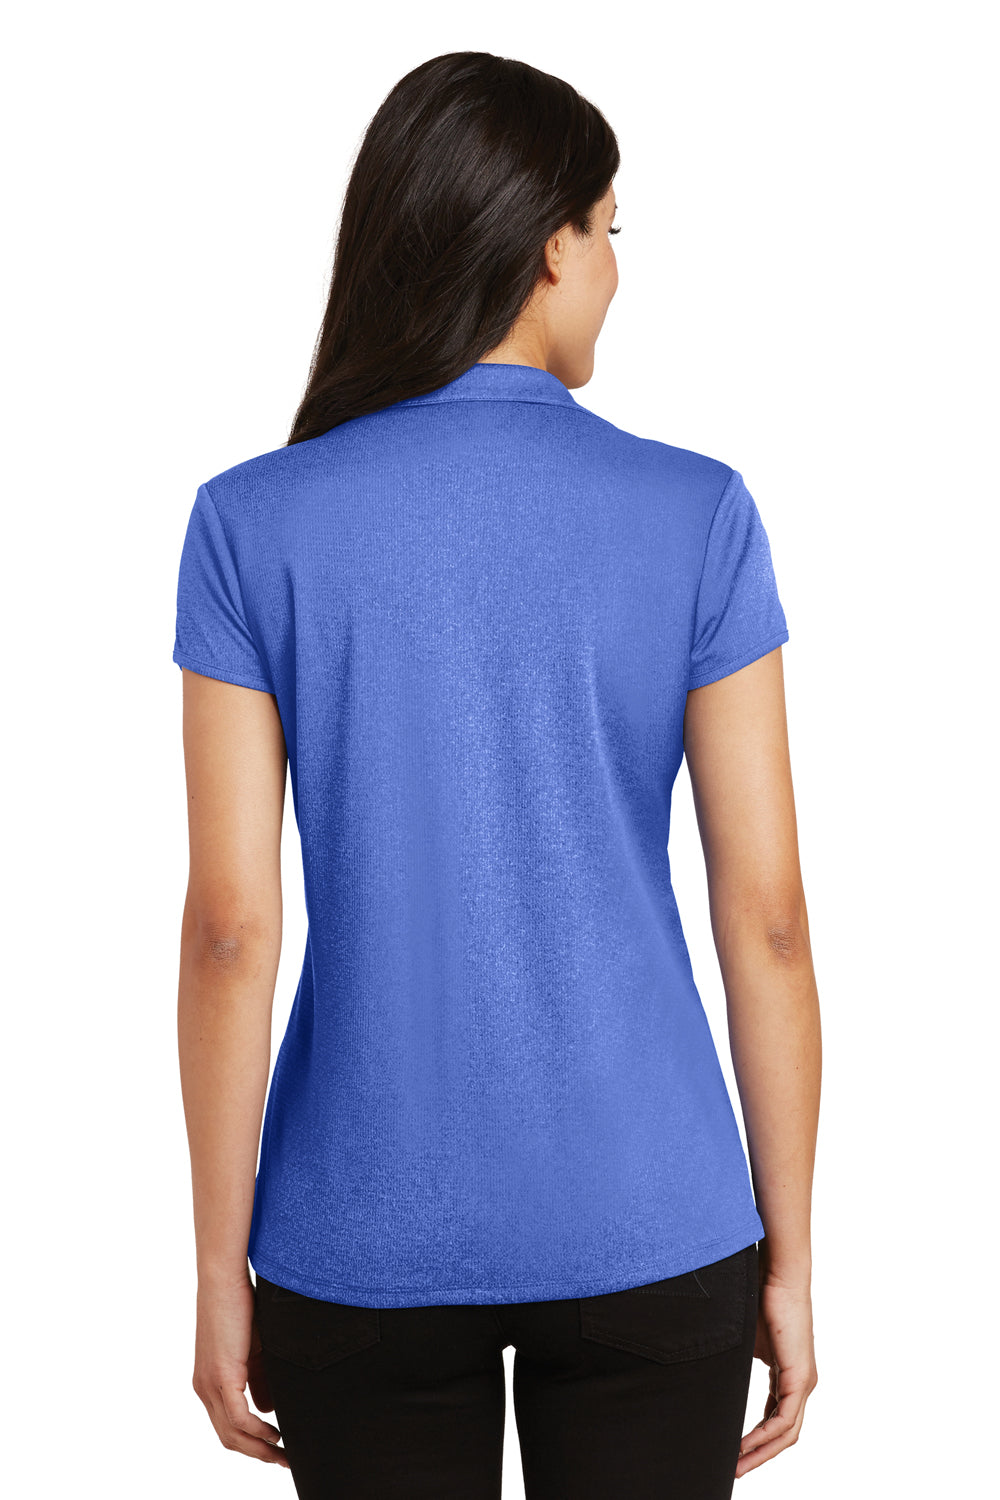 Port Authority L576 Womens Trace Moisture Wicking Short Sleeve Polo Shirt Heather Royal Blue Back